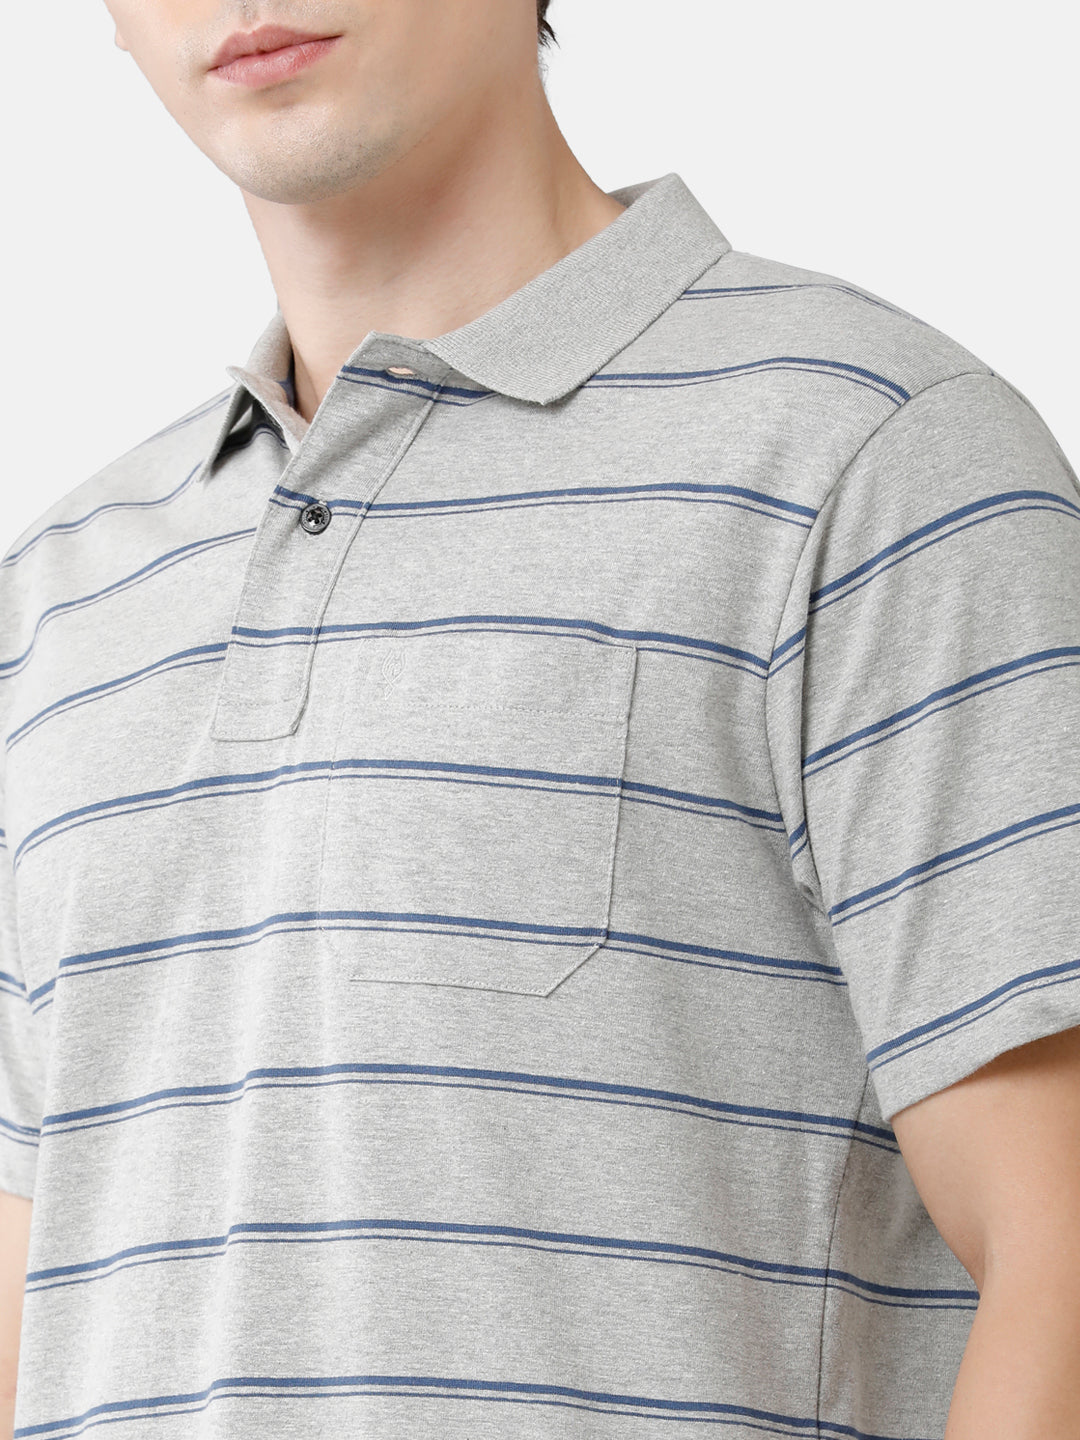 Classic Polo Mens Cotton Blend Striped Authentic Fit Polo Neck Grey Color T-Shirt | Avon 479 A